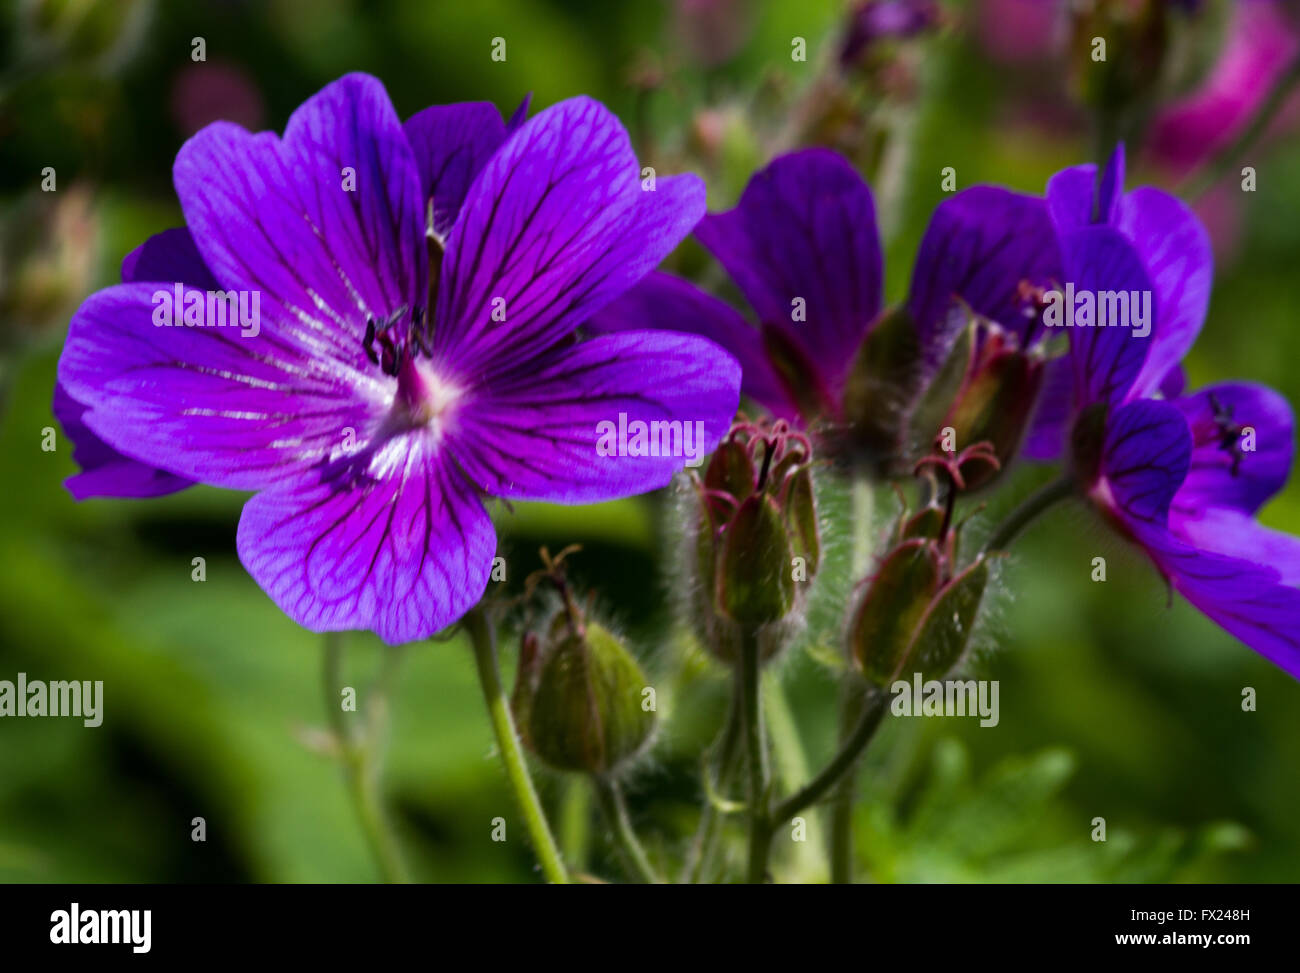 Flowers in the garden of Emil Nolde in Seebuell Stock Photo